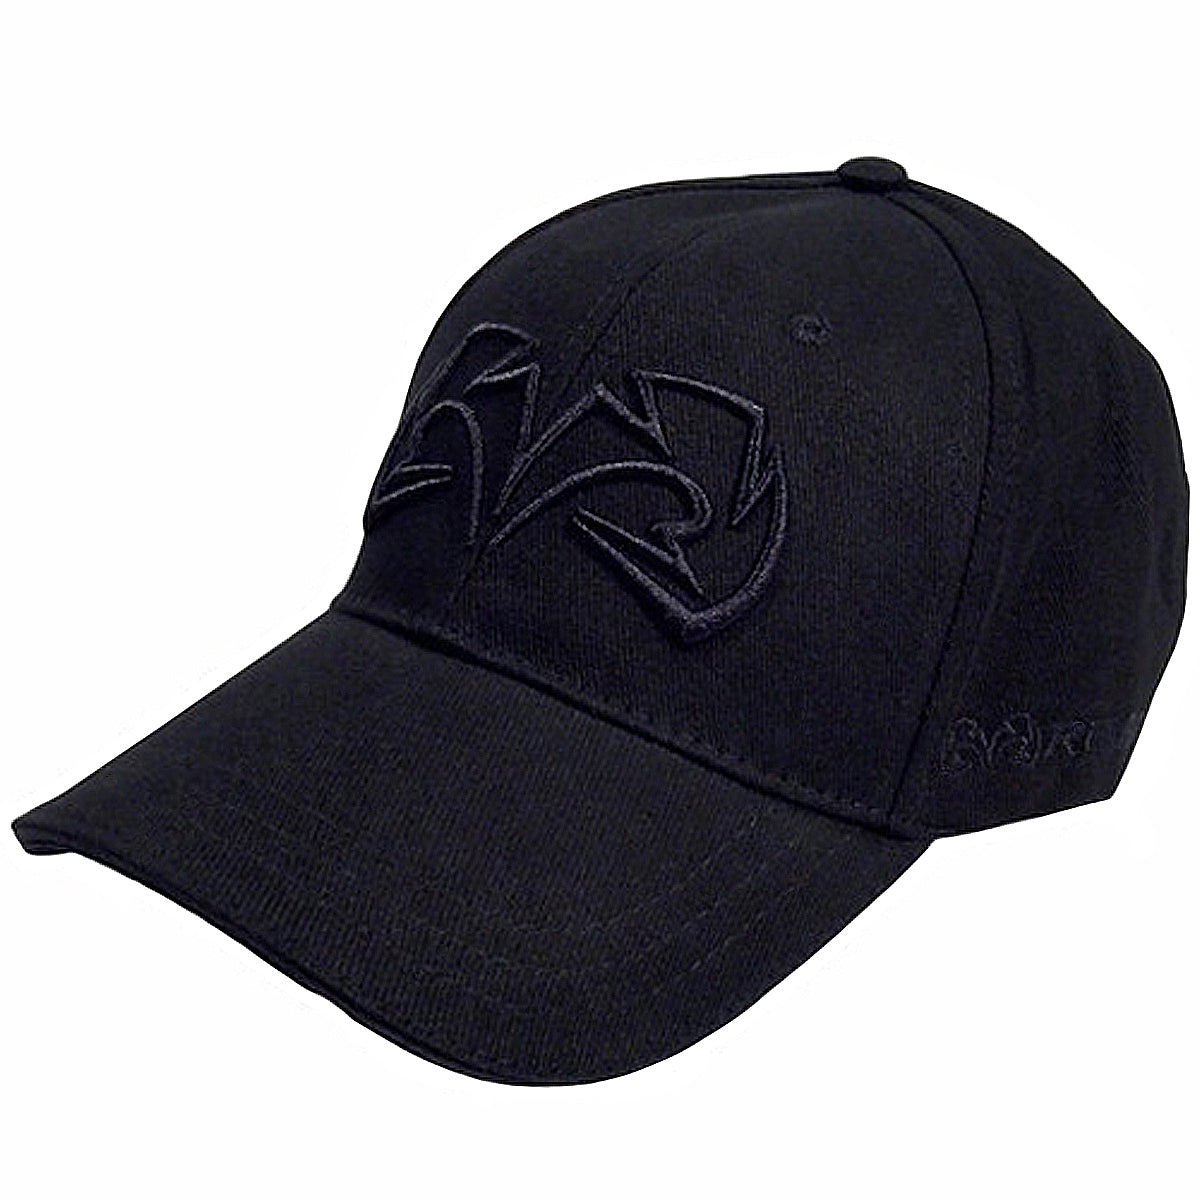 Rival Boxing Embroidered Logo Adjustable Baseball Cap - Black RIVAL